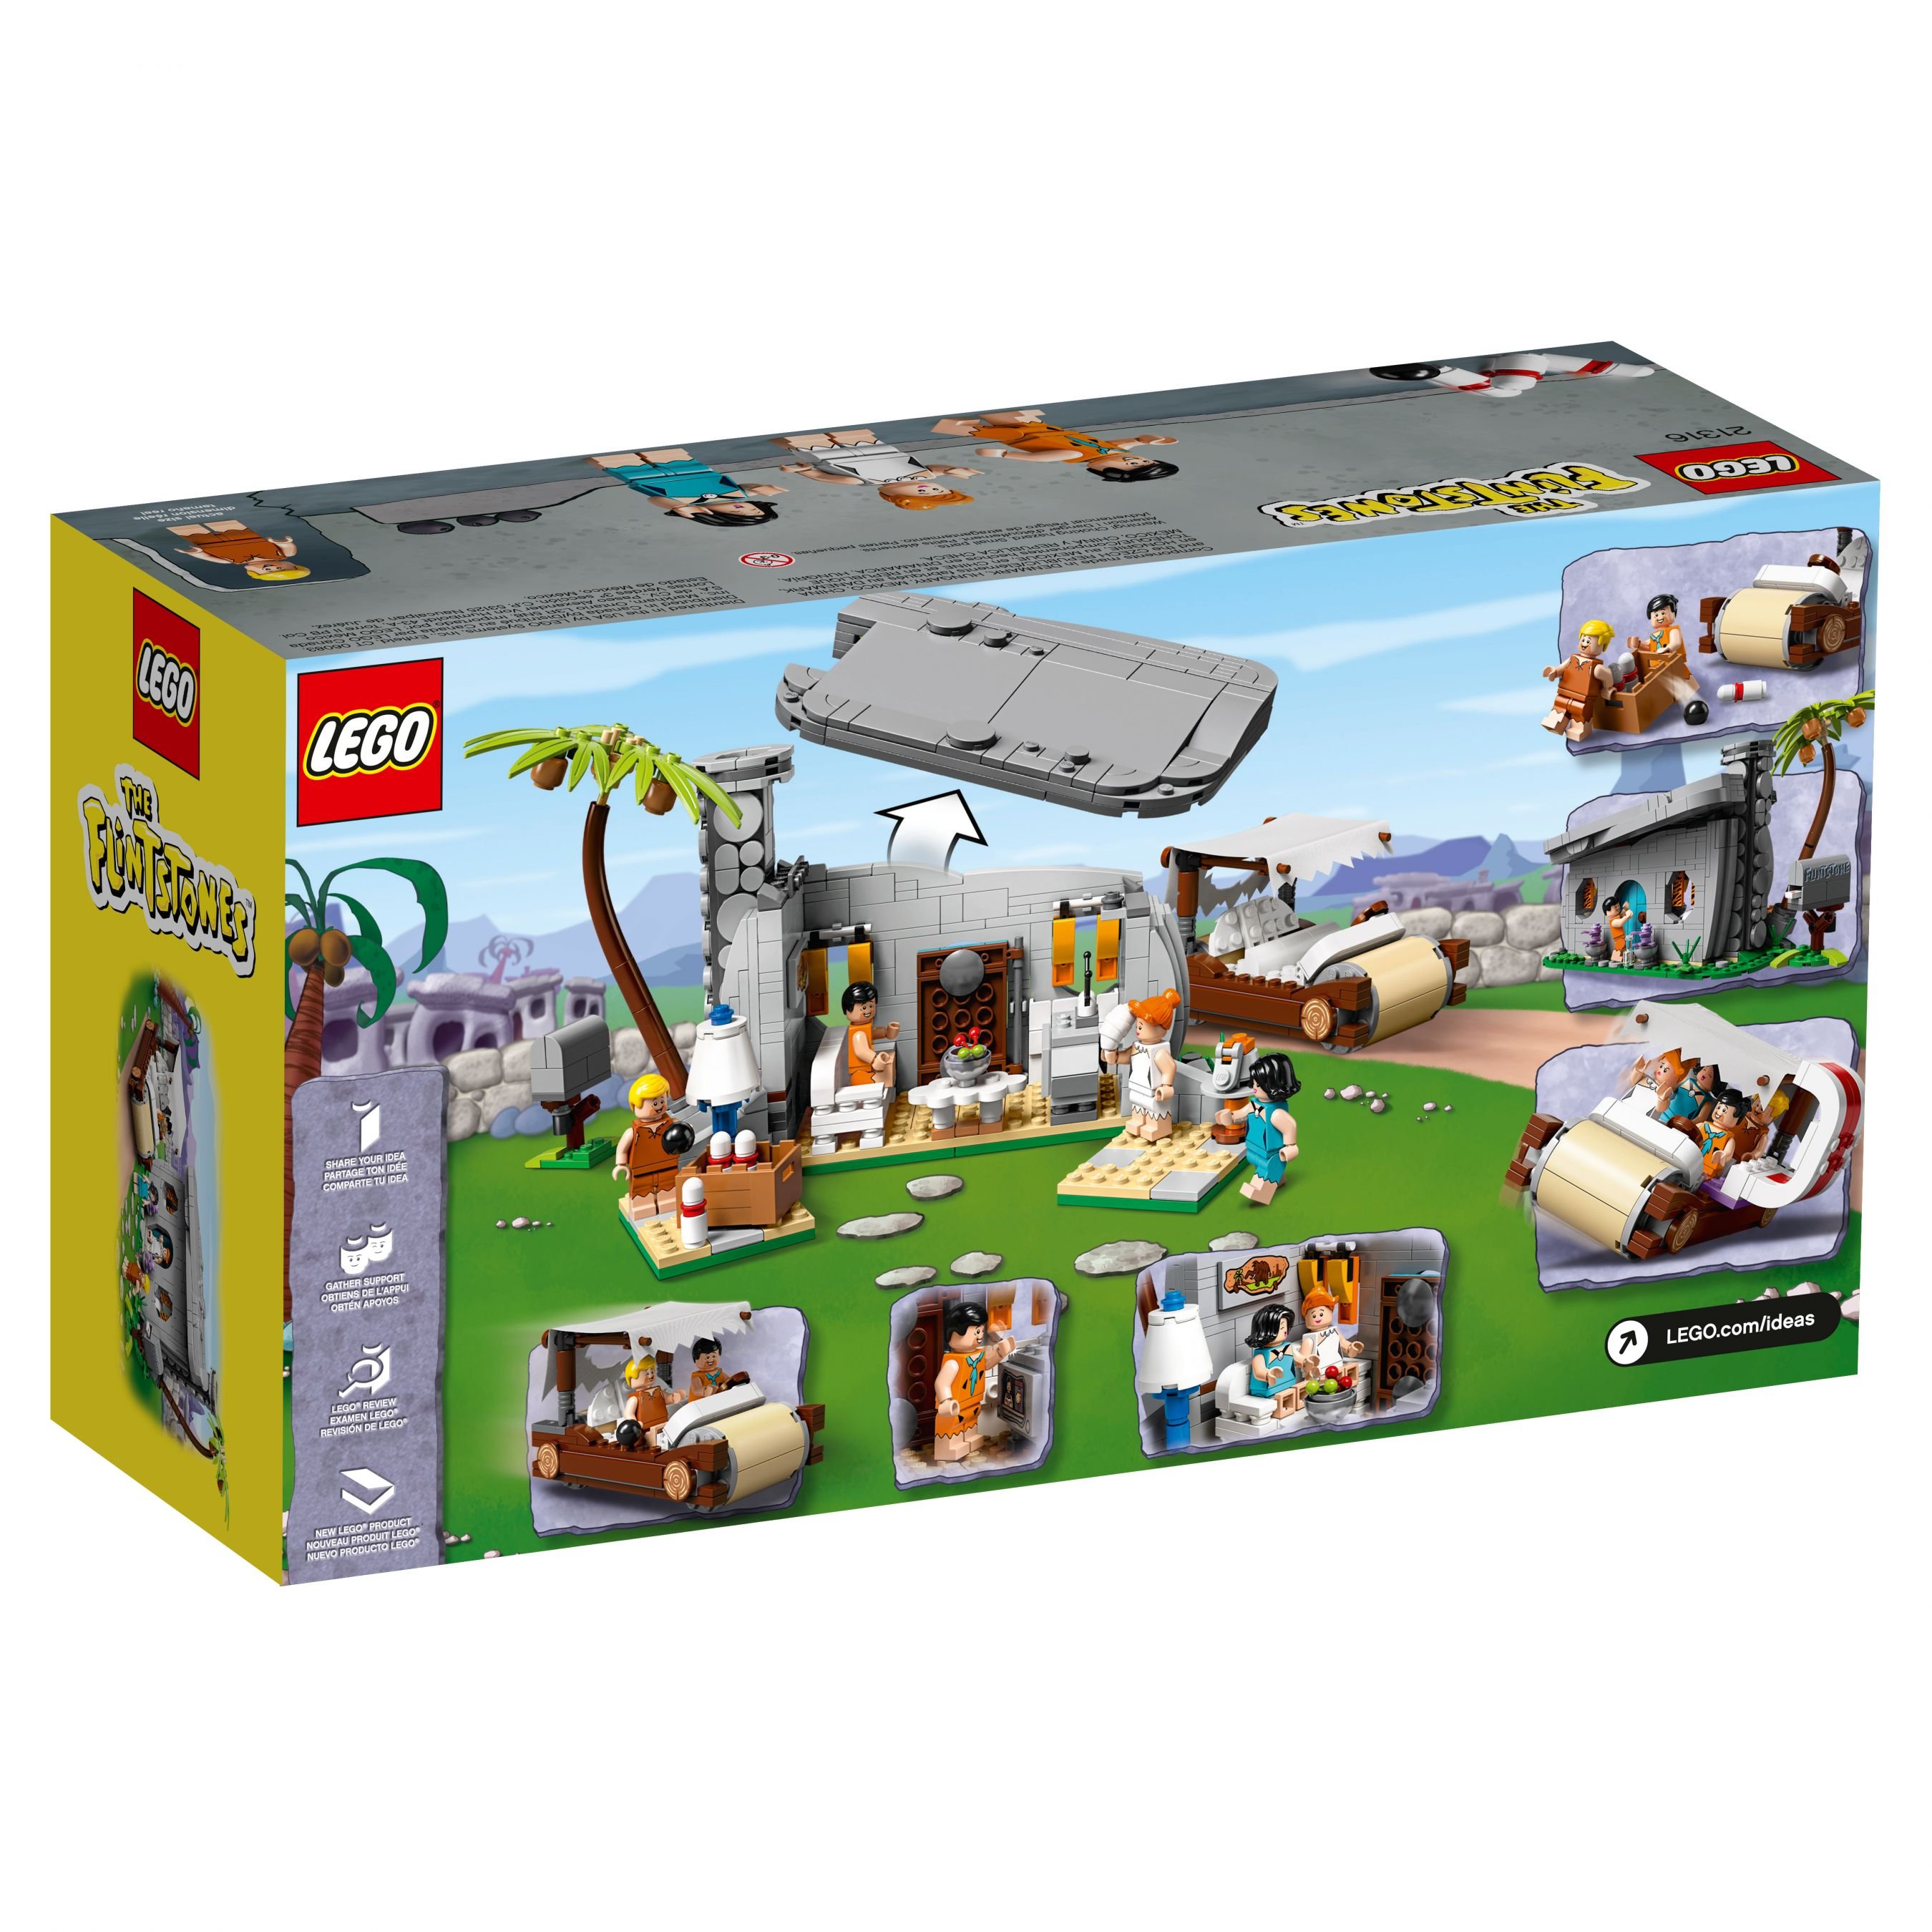 LEGO Ideas 21316 The Flintstones - Familie Feuerstein LEGO_21316_alt8.jpg